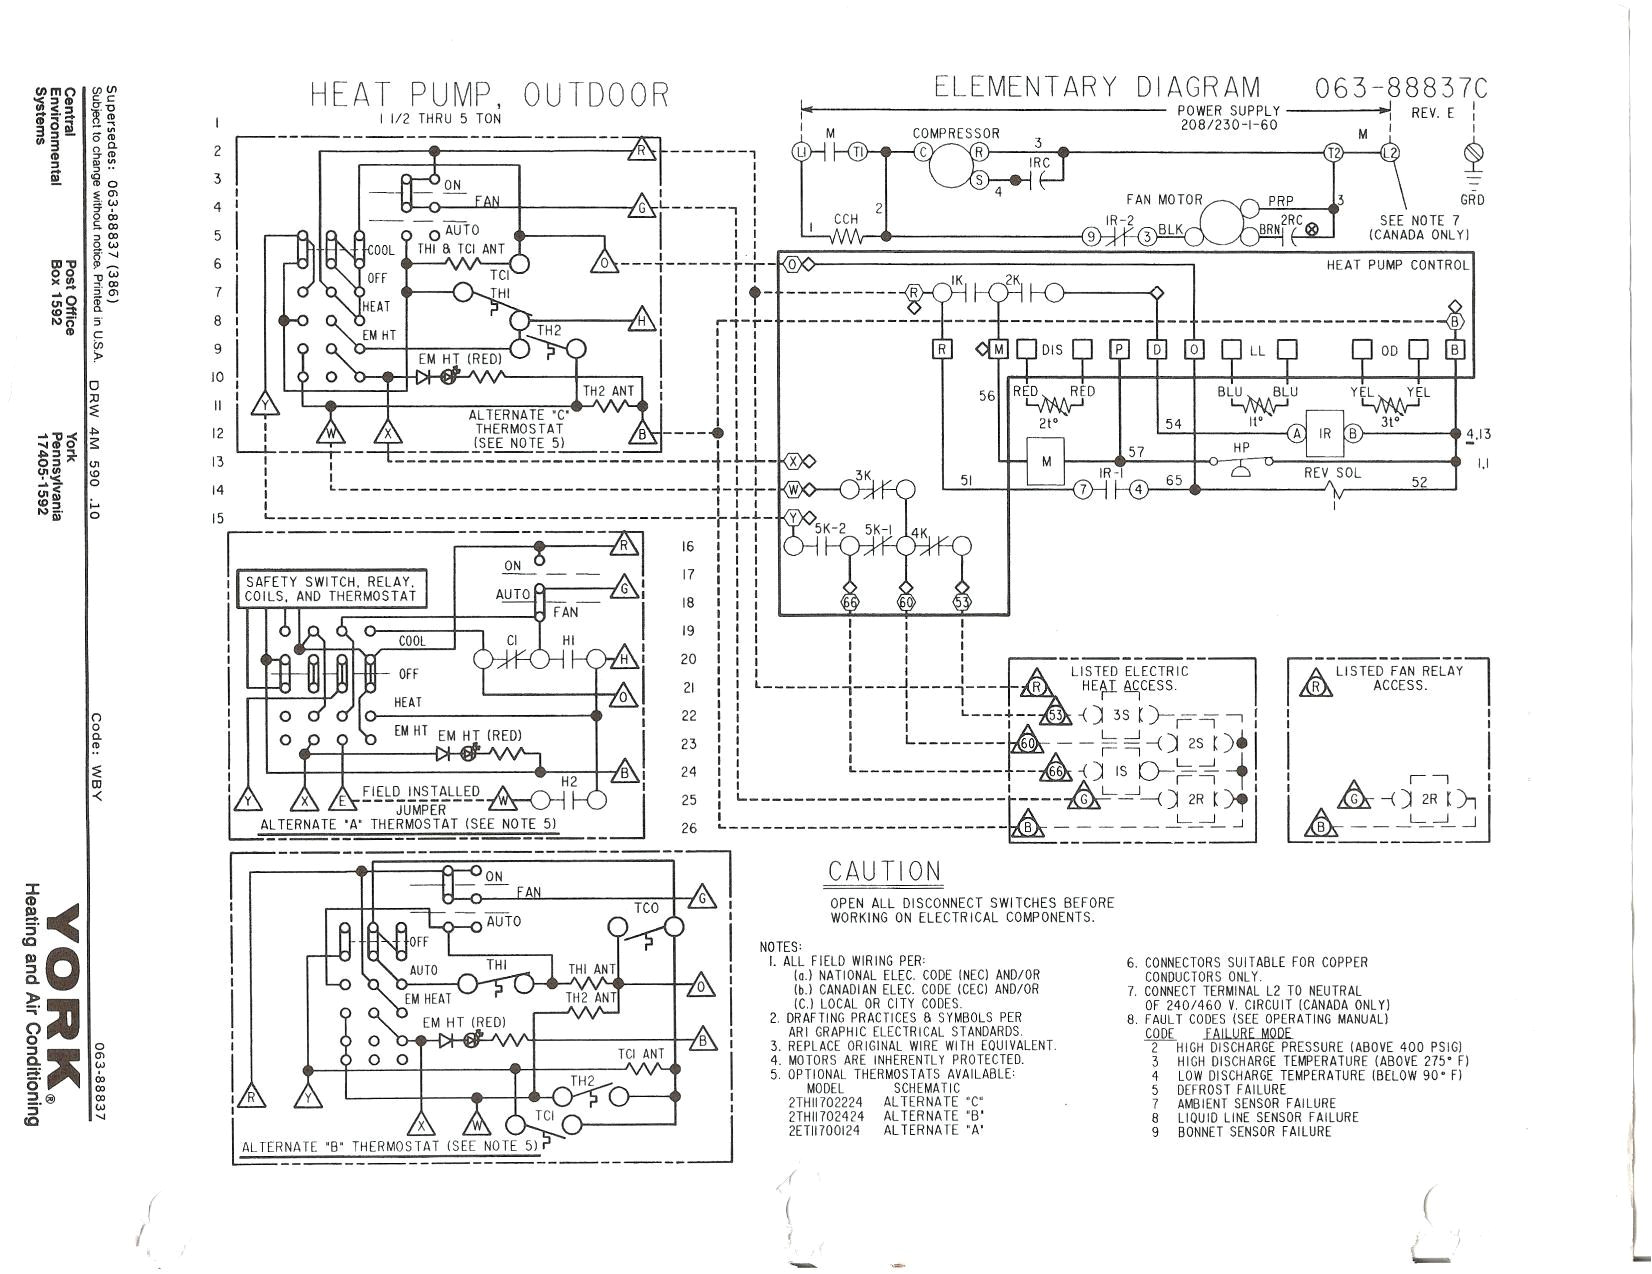 e1eh 015ha wiring diagram best of e1eh 015ha wiring diagram new wiring diagram for trane air